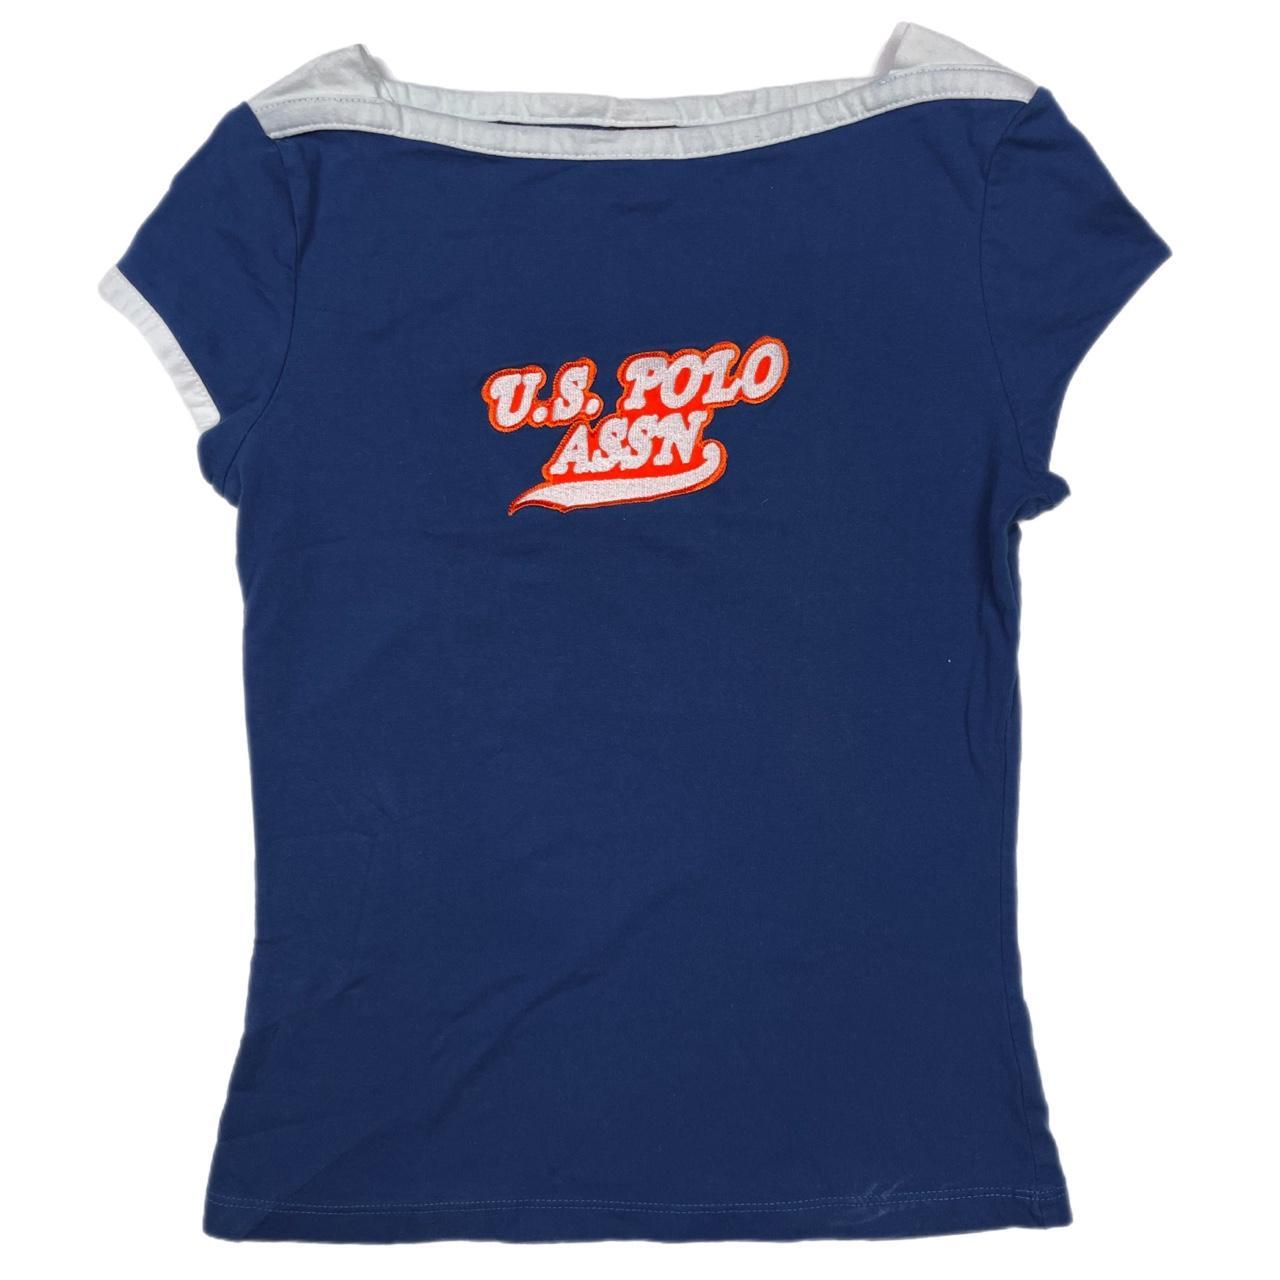 U.S. Polo Assn. Women's White and Blue T-shirt